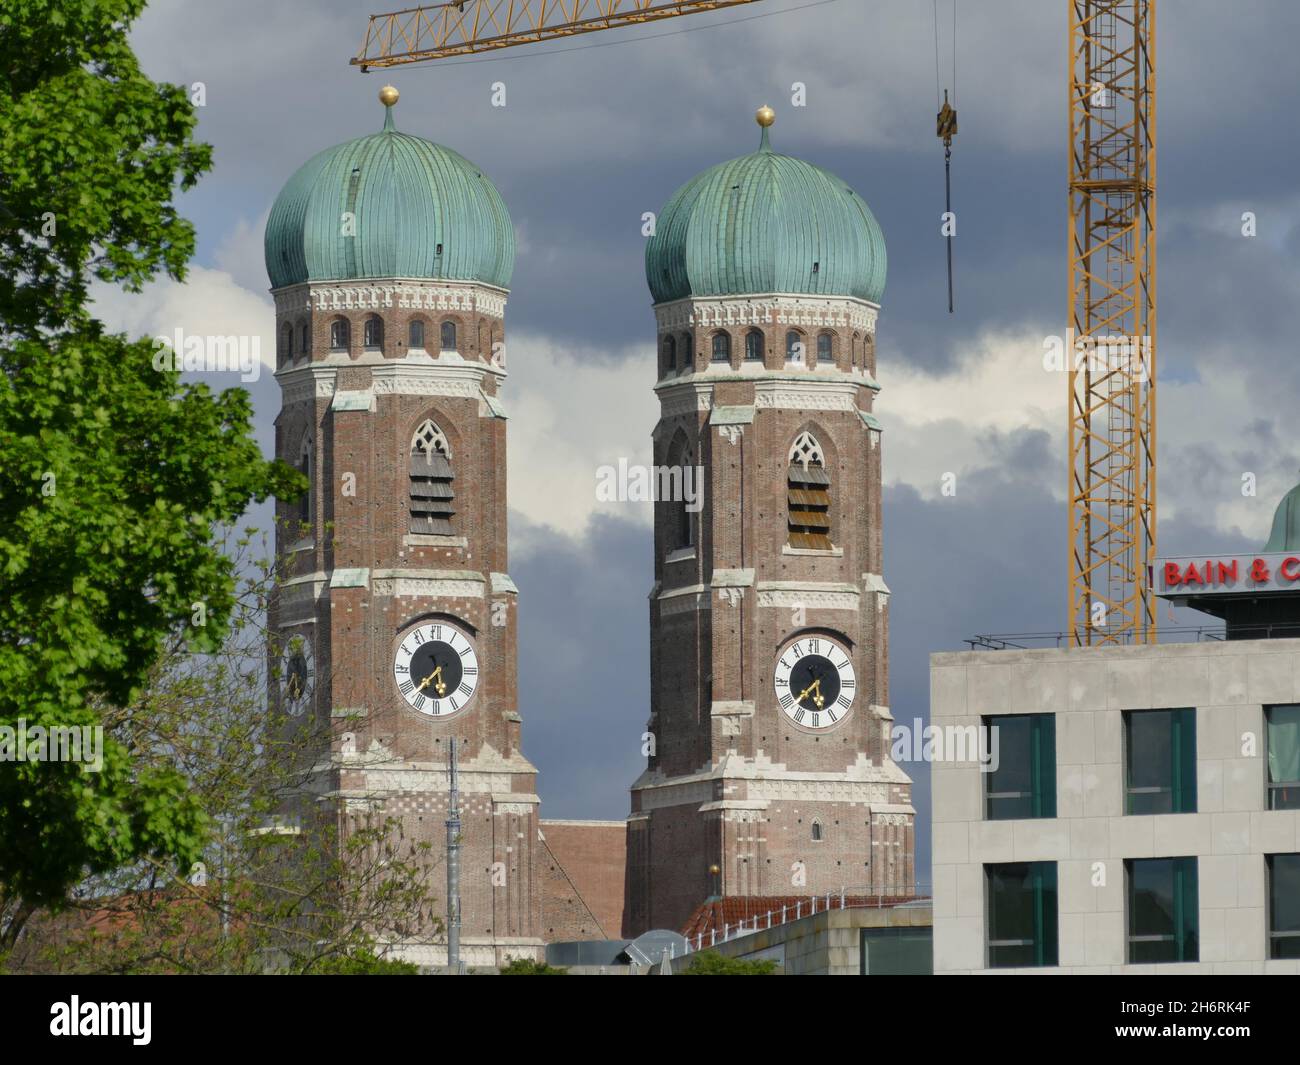 Frauentürme München, landmark of munich city. Stock Photo